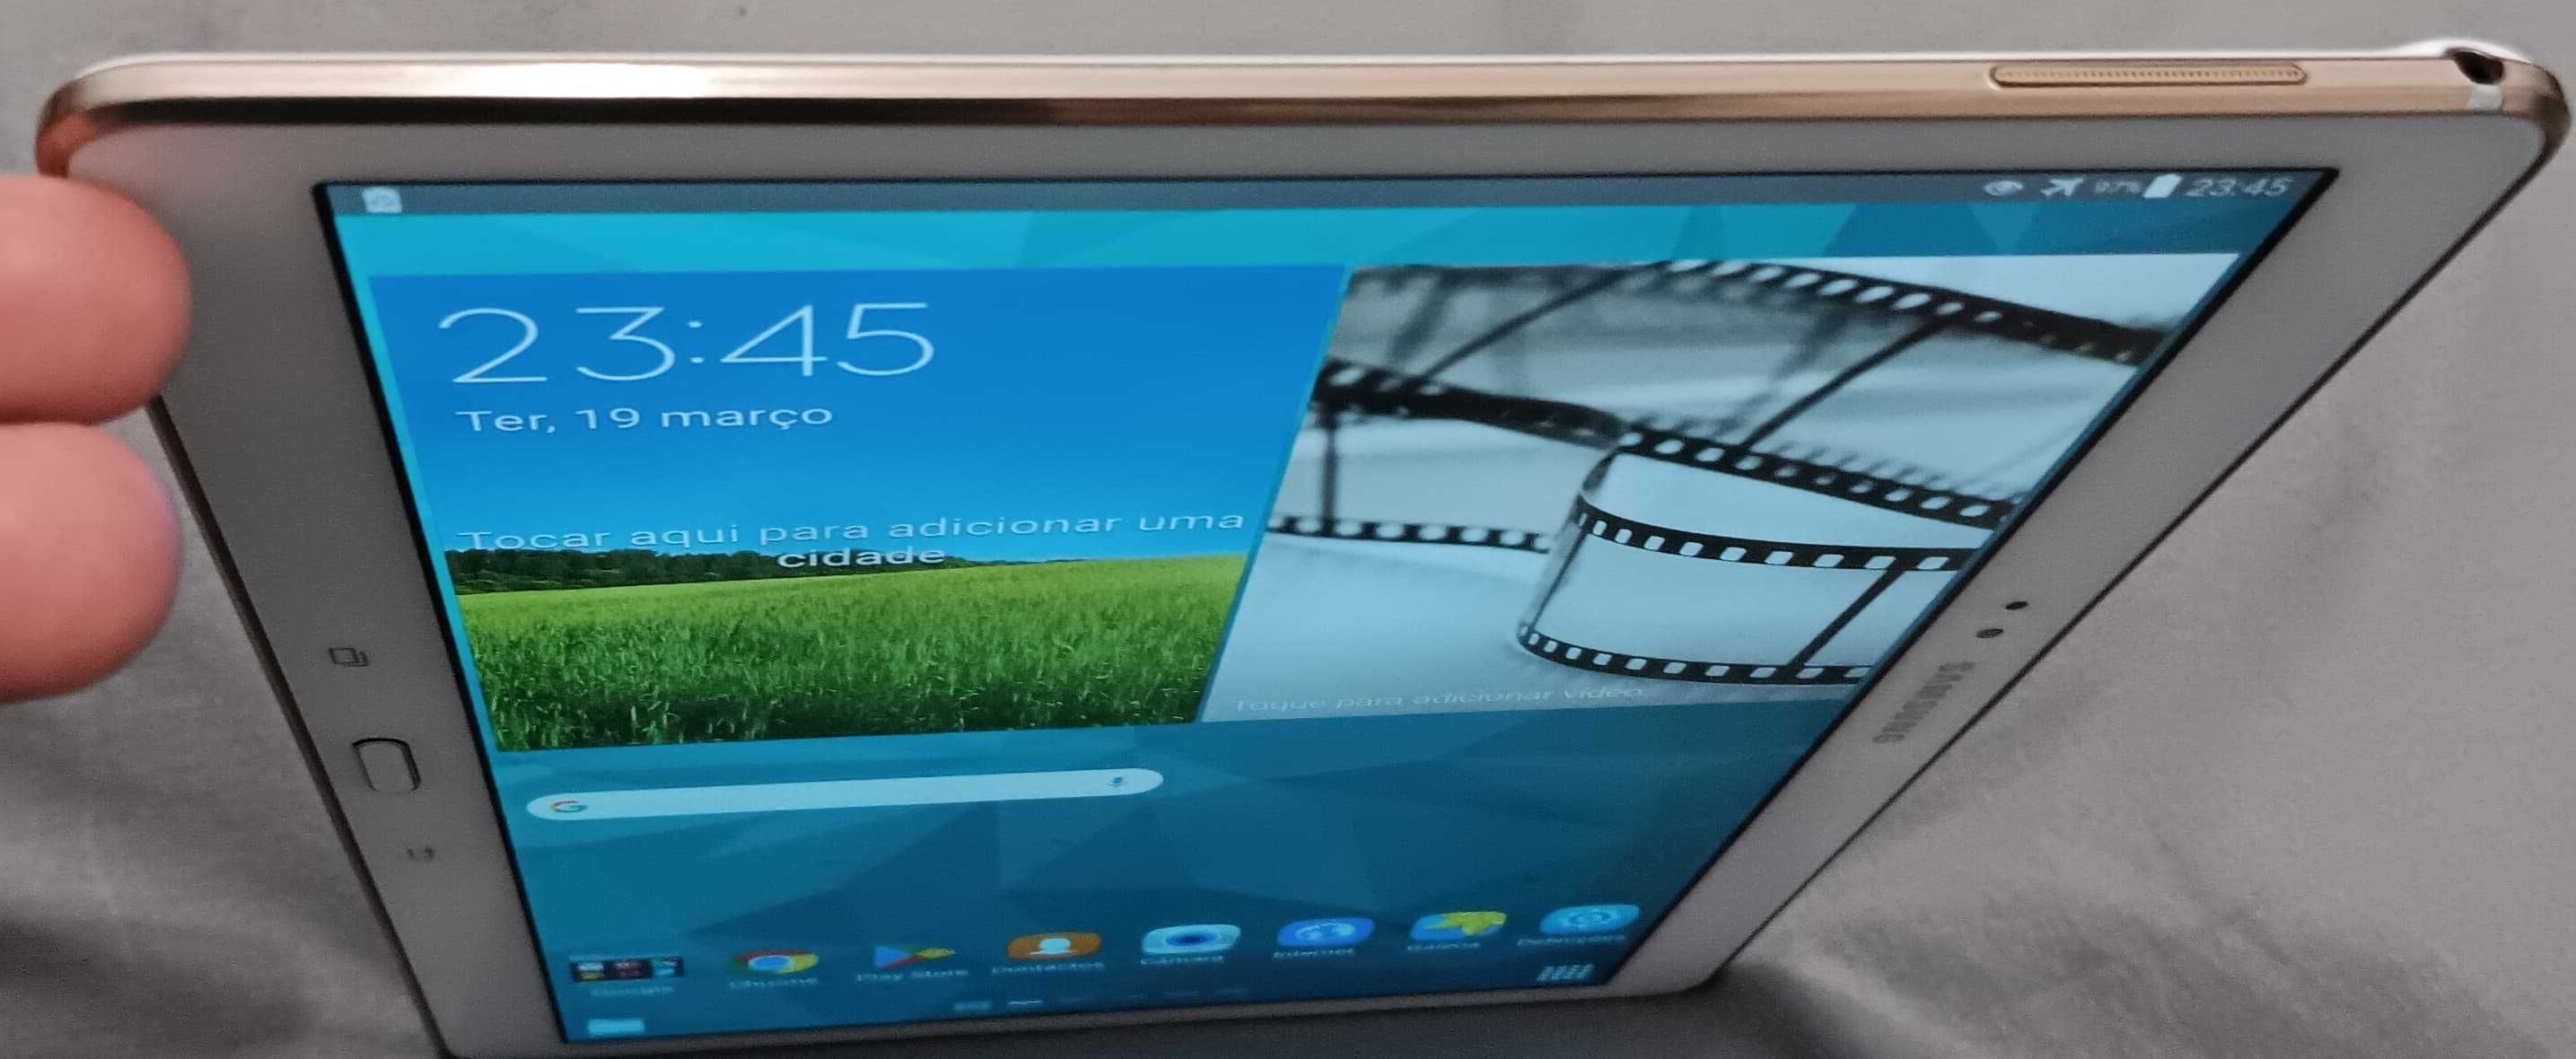 Tablet Samsung Galaxy Tab S tela de 10.5 SM-T800 16GB